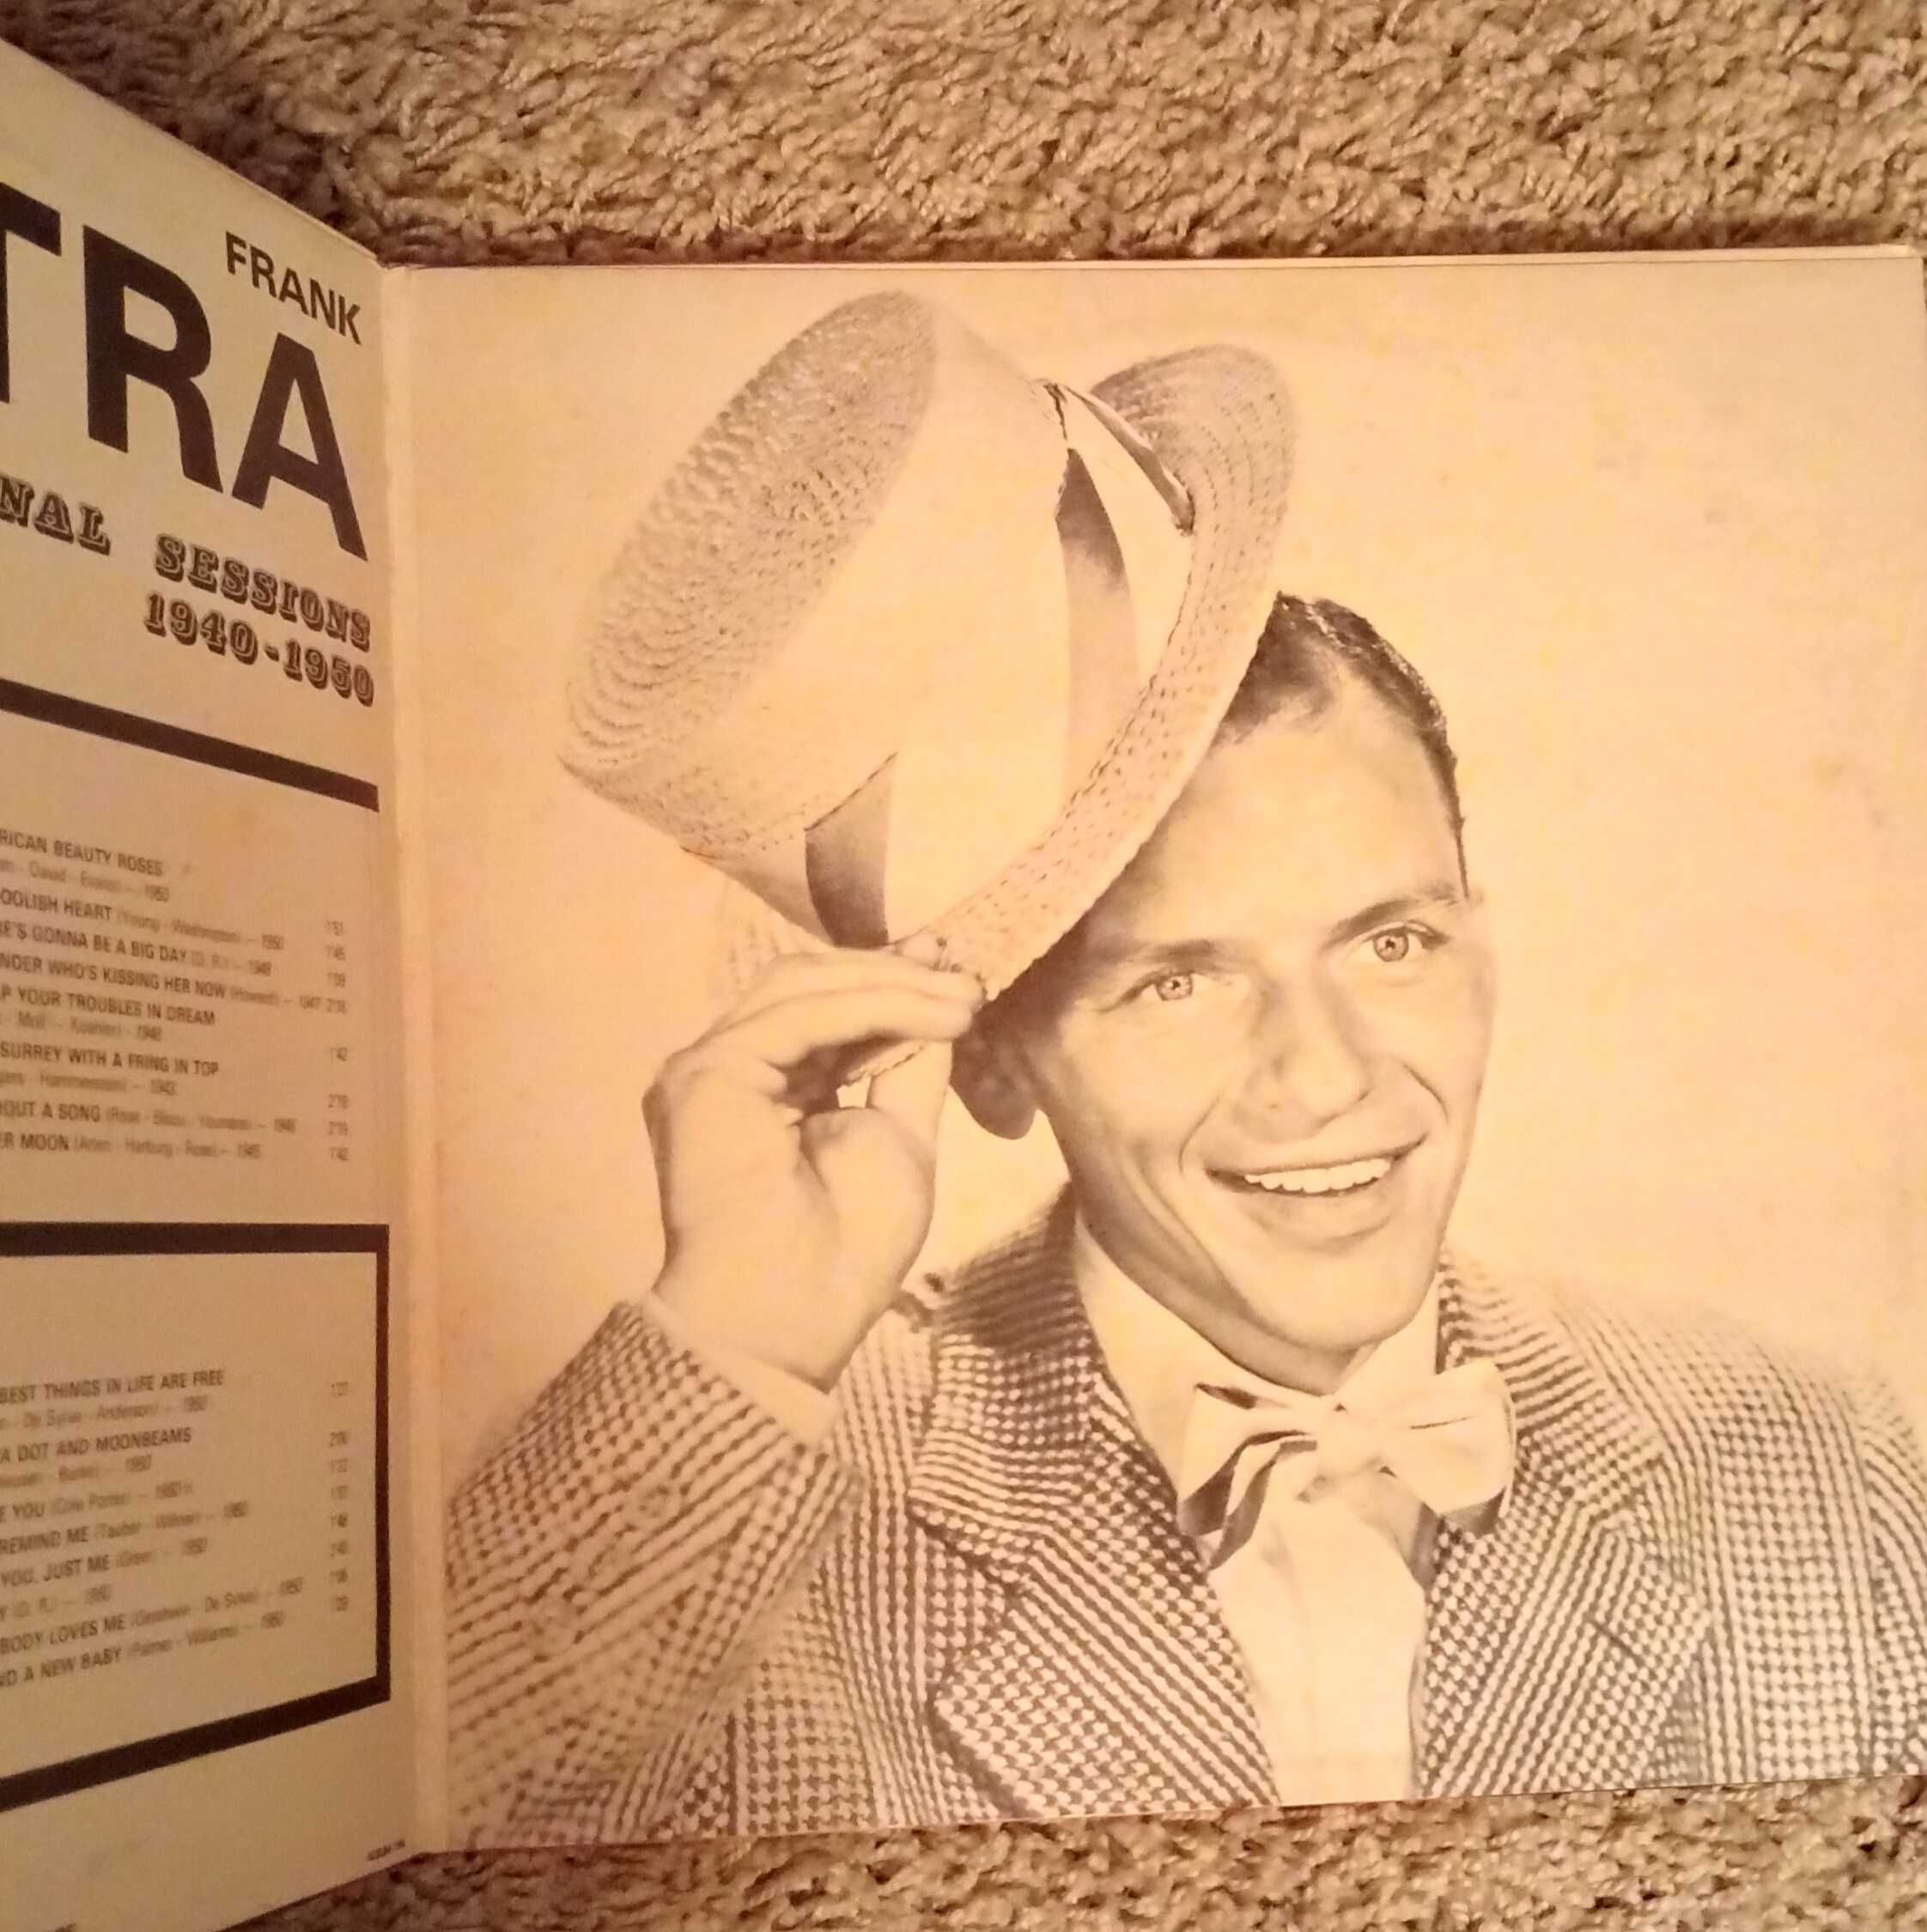 LP vinil duplo Frank Sinatra